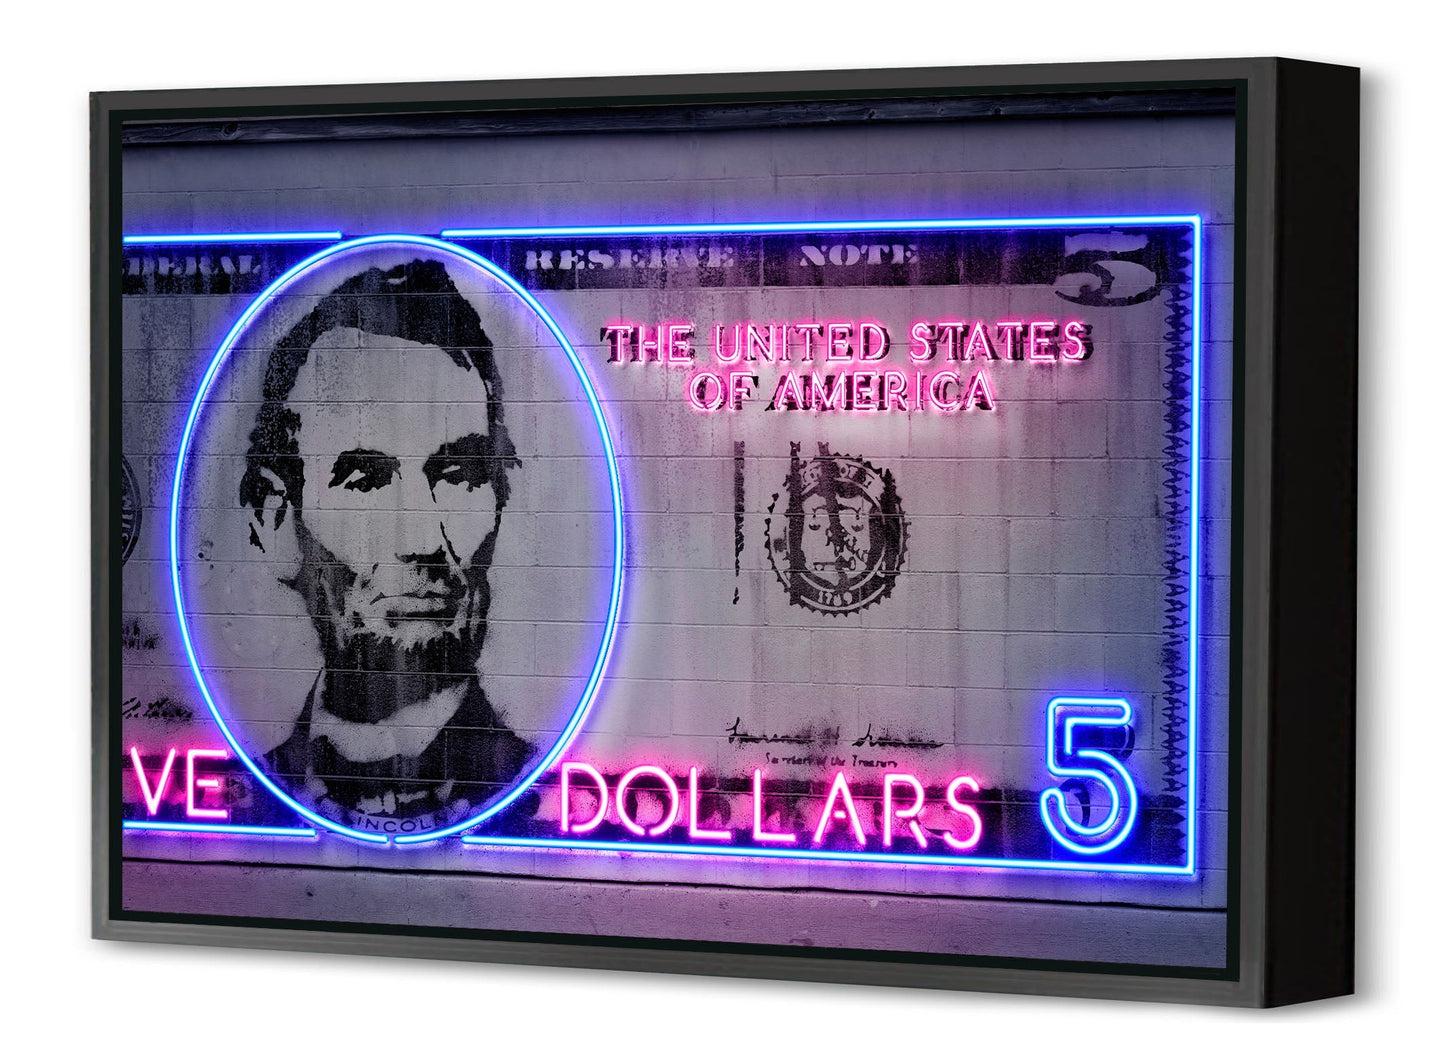 5 Dollars-neon-art, print-Canvas Print with Box Frame-40 x 60 cm-BLUE SHAKER